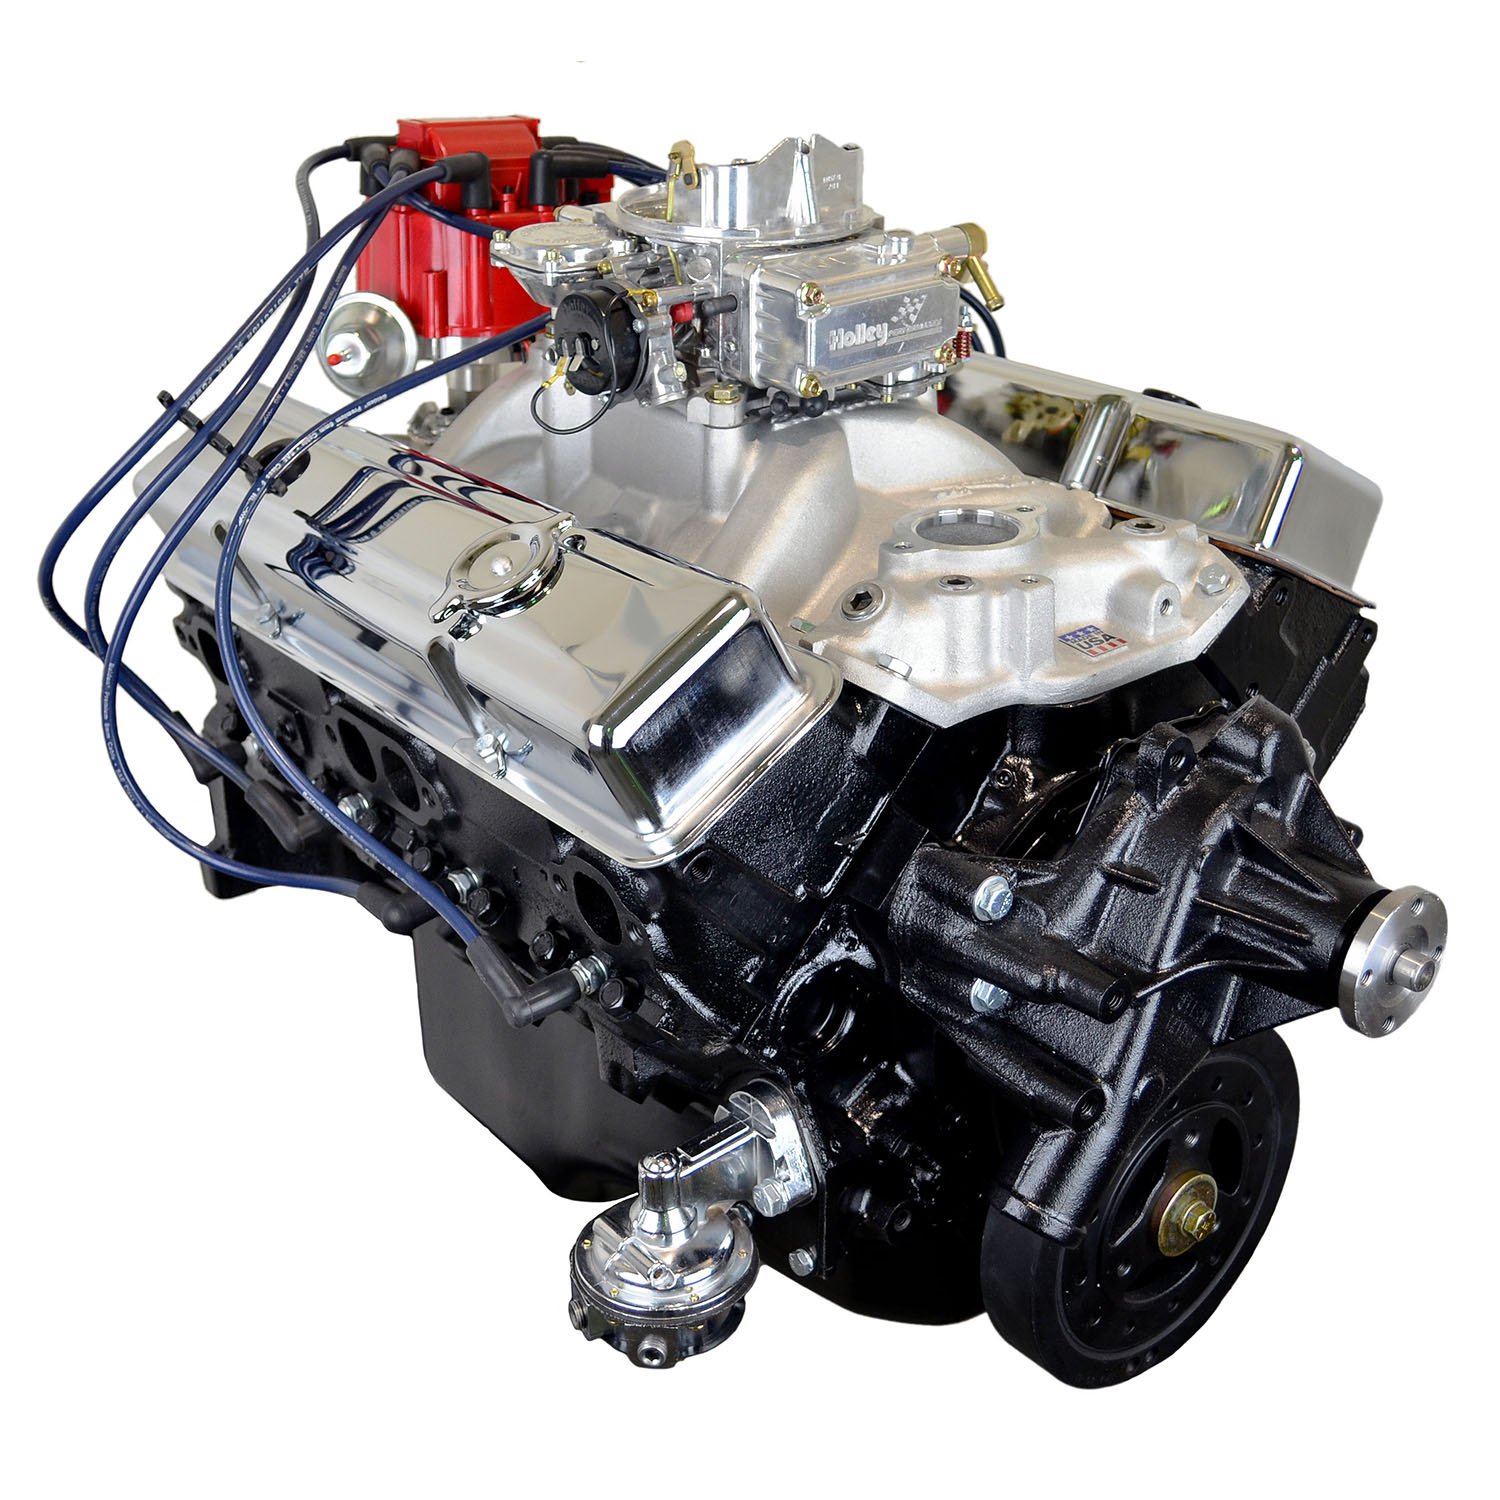 HP98C High Performance Crate Engine Small Block Chevy 350ci / 345HP / 400TQ